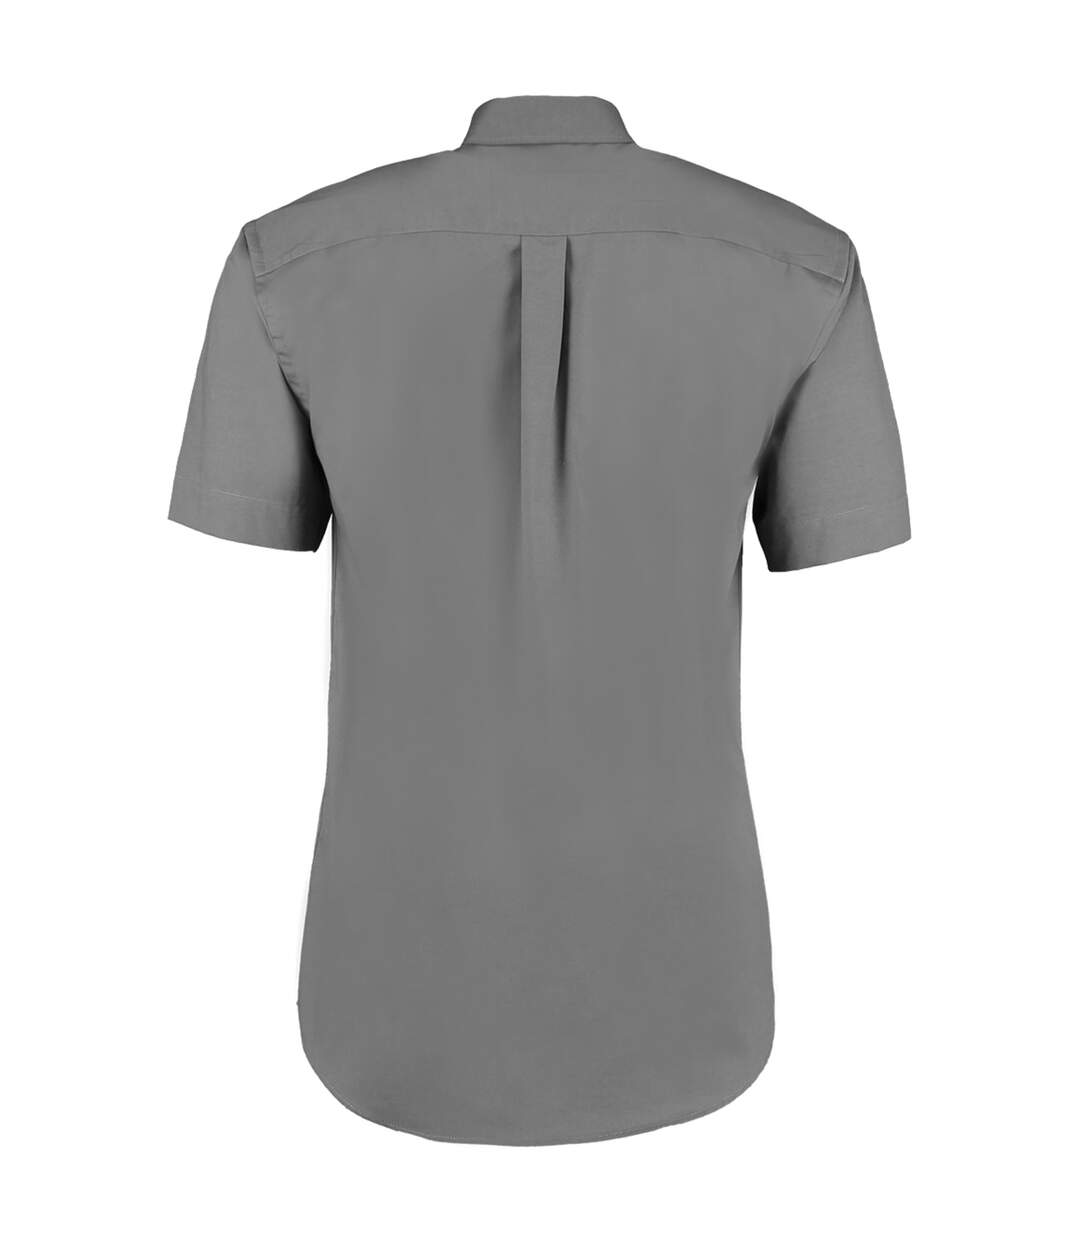 Kustom Kit Mens Short Sleeve Corporate Oxford Shirt (Red) - UTBC595